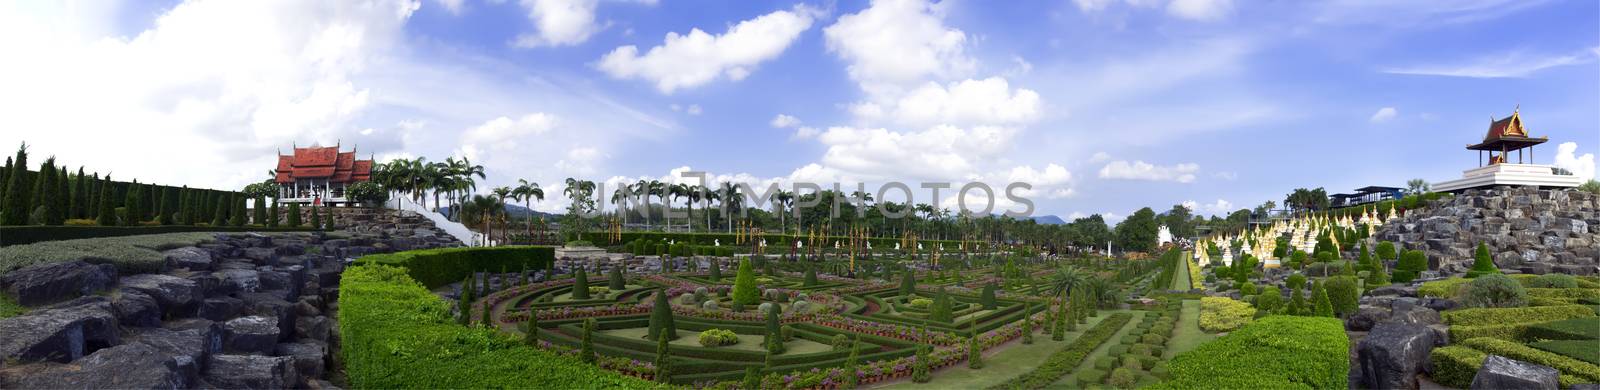 French Garden Panorama in Nong Nooch. Thailand.